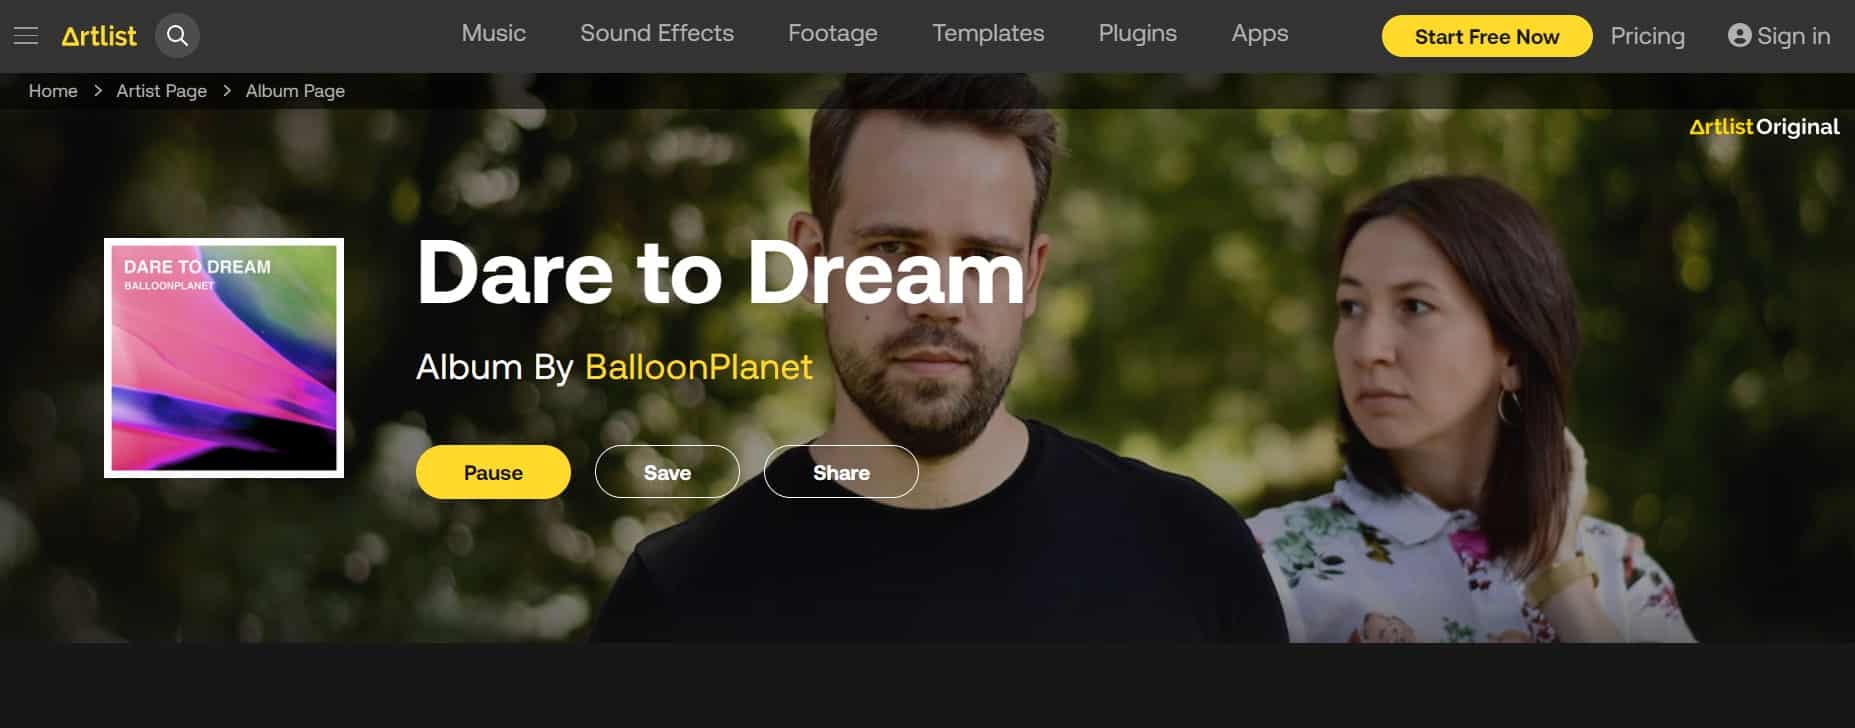 Dare to Dream by BalloonPlanet